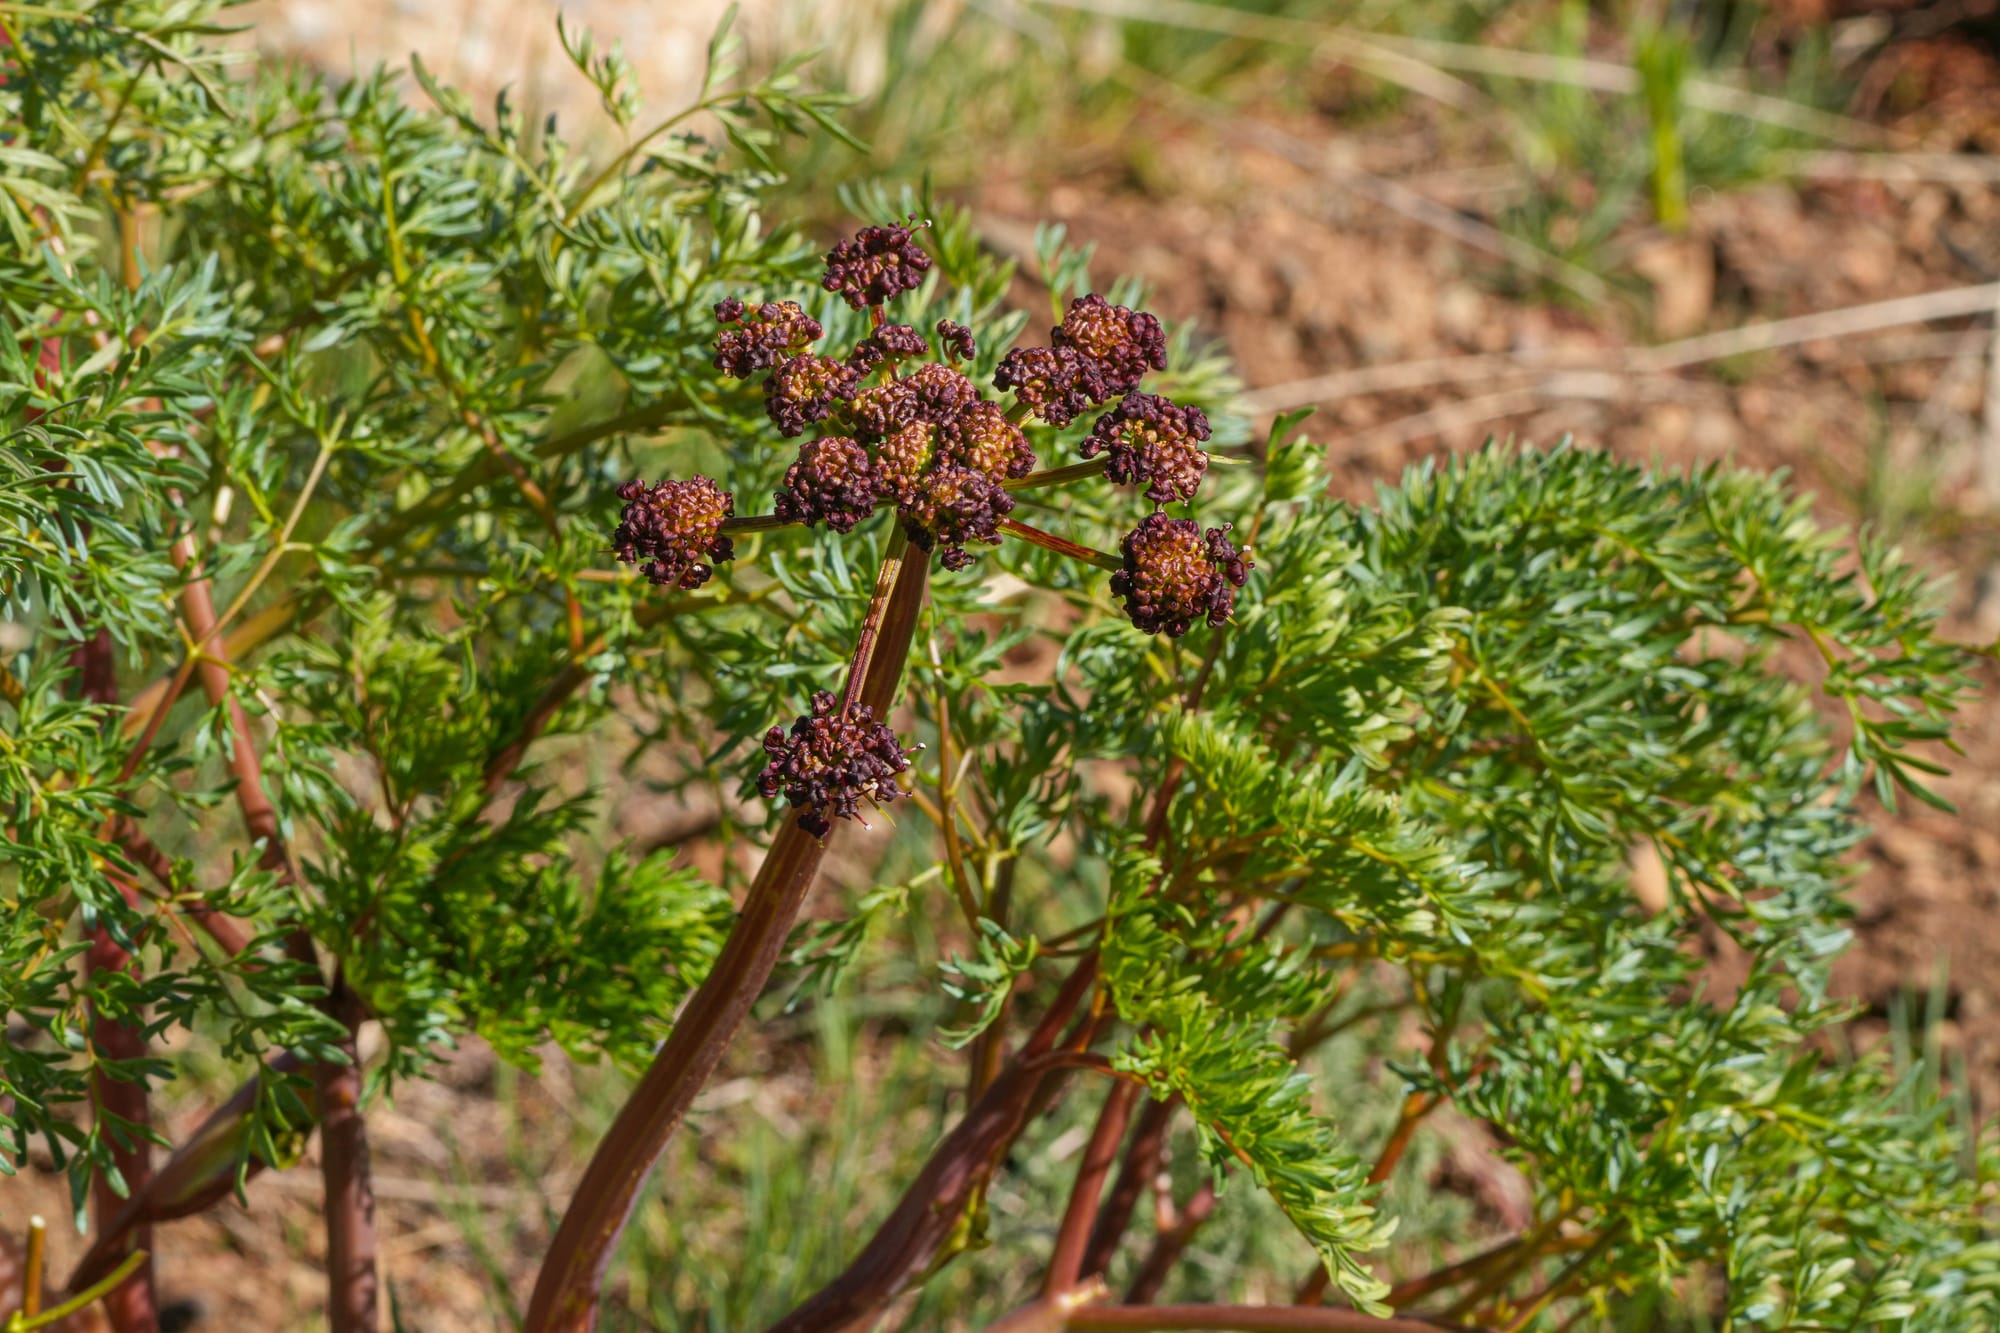 fernleaf desert parsley